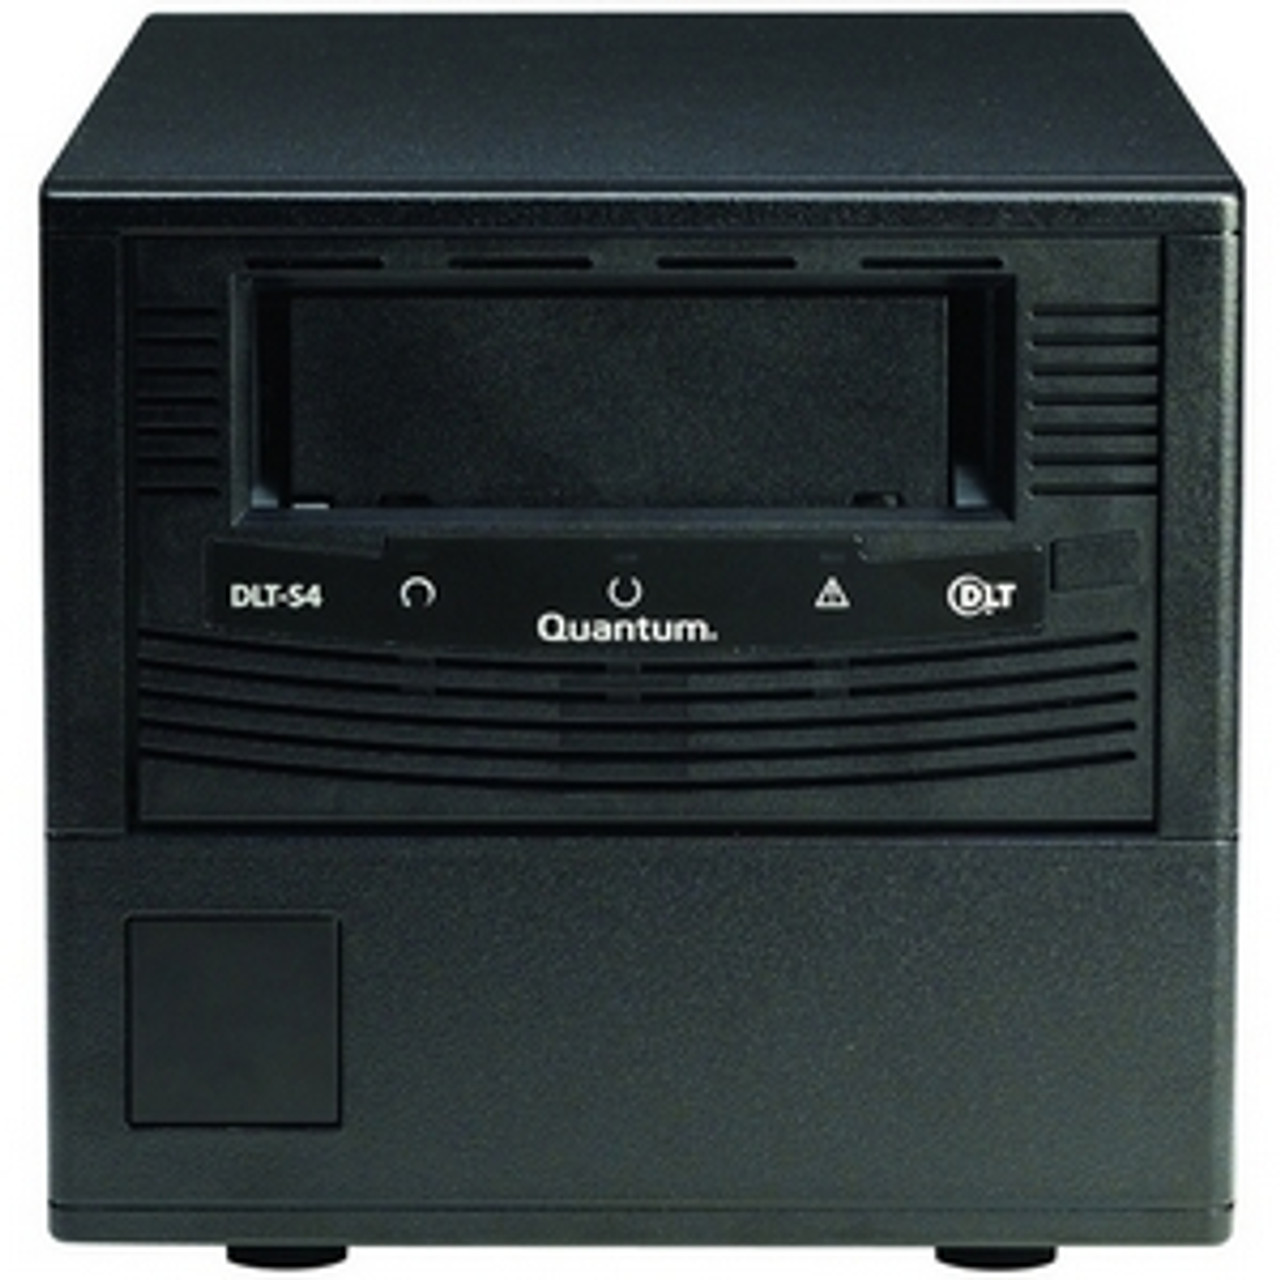 TC-S45BT-EY - Quantum DLT-S4 Tape drive - 800GB (Native)/1.6TB (Compressed) - Desktop